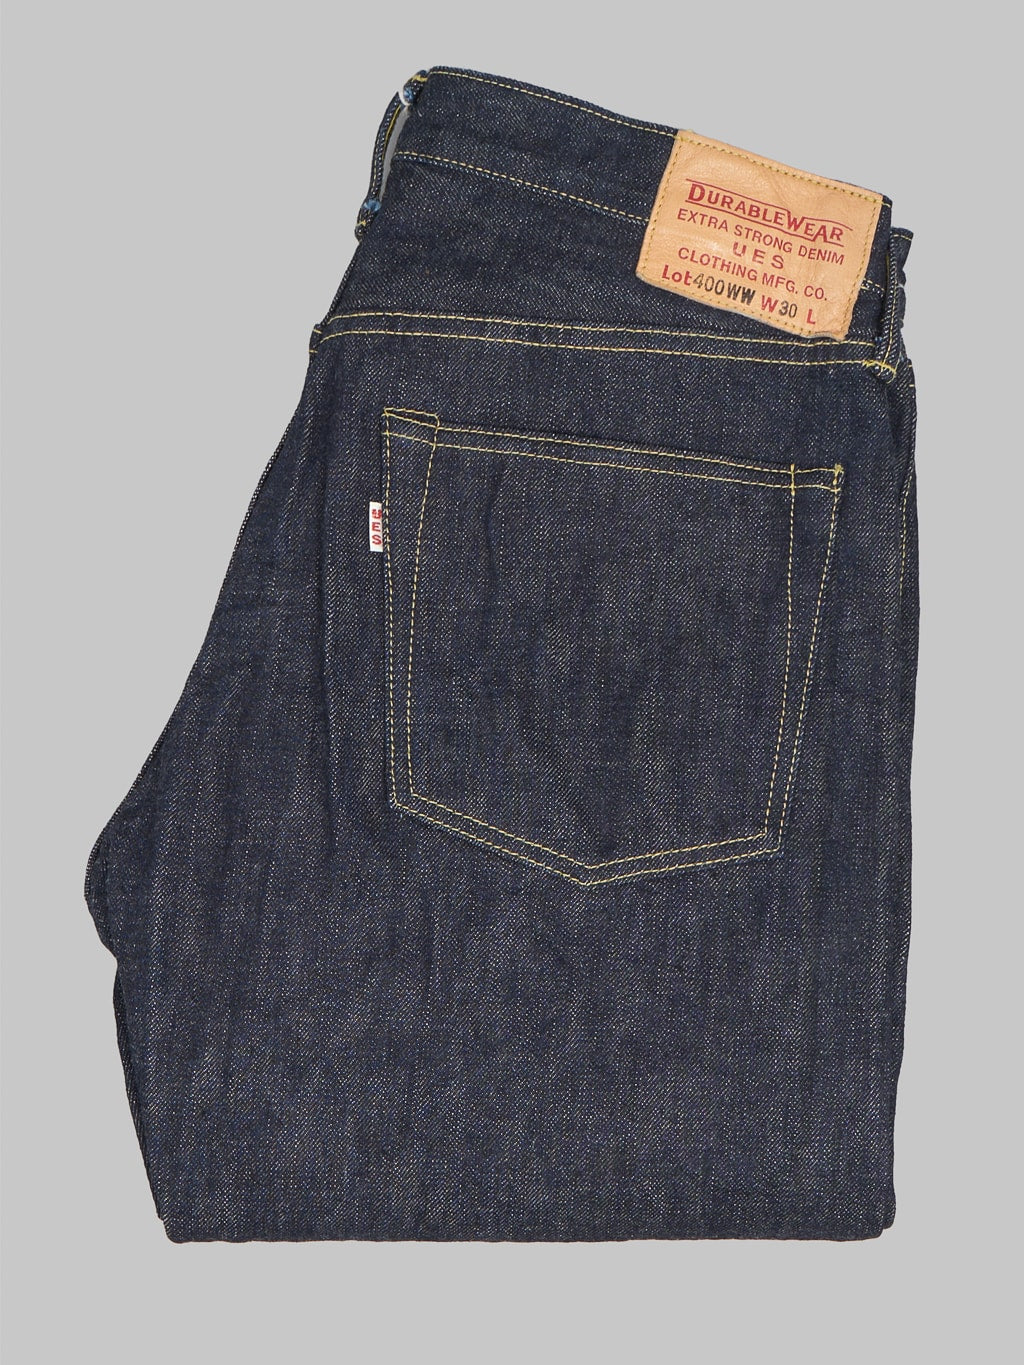 UES 400 WW Post World War Regular Straight Jeans made in kojima